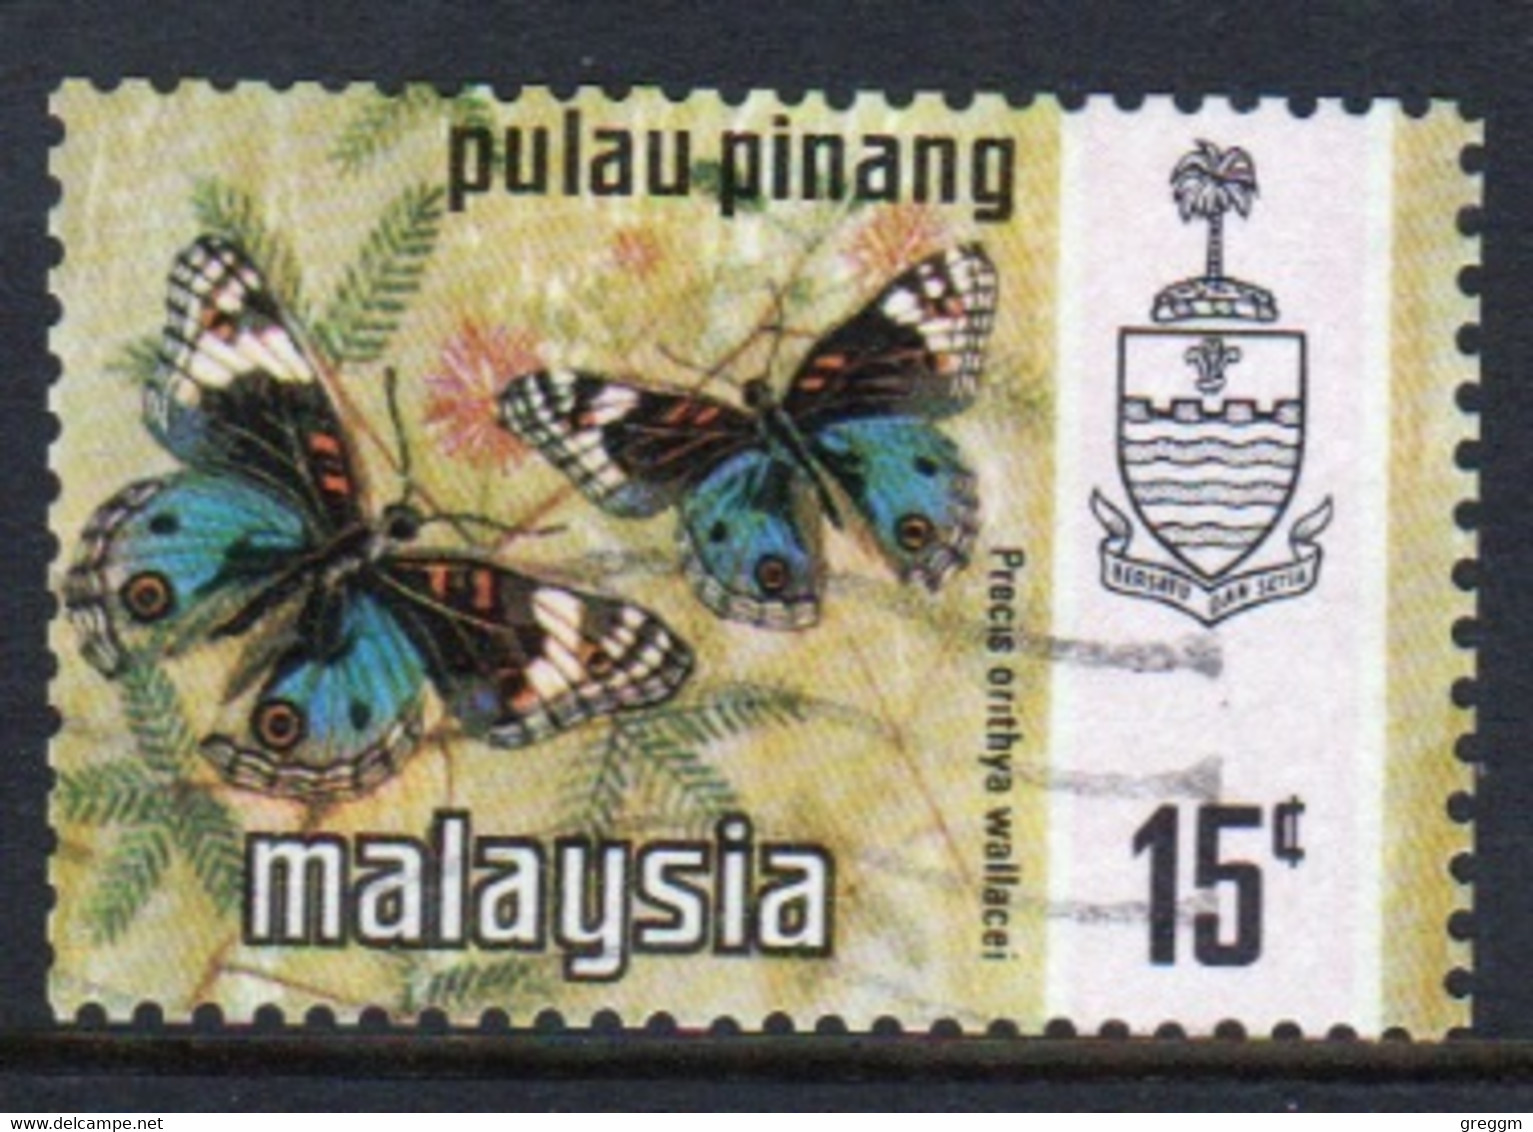 Malaya Penang 1971 Queen Elizabeth II Single 15c Stamp From The Butterflies Set In Fine Used - Penang